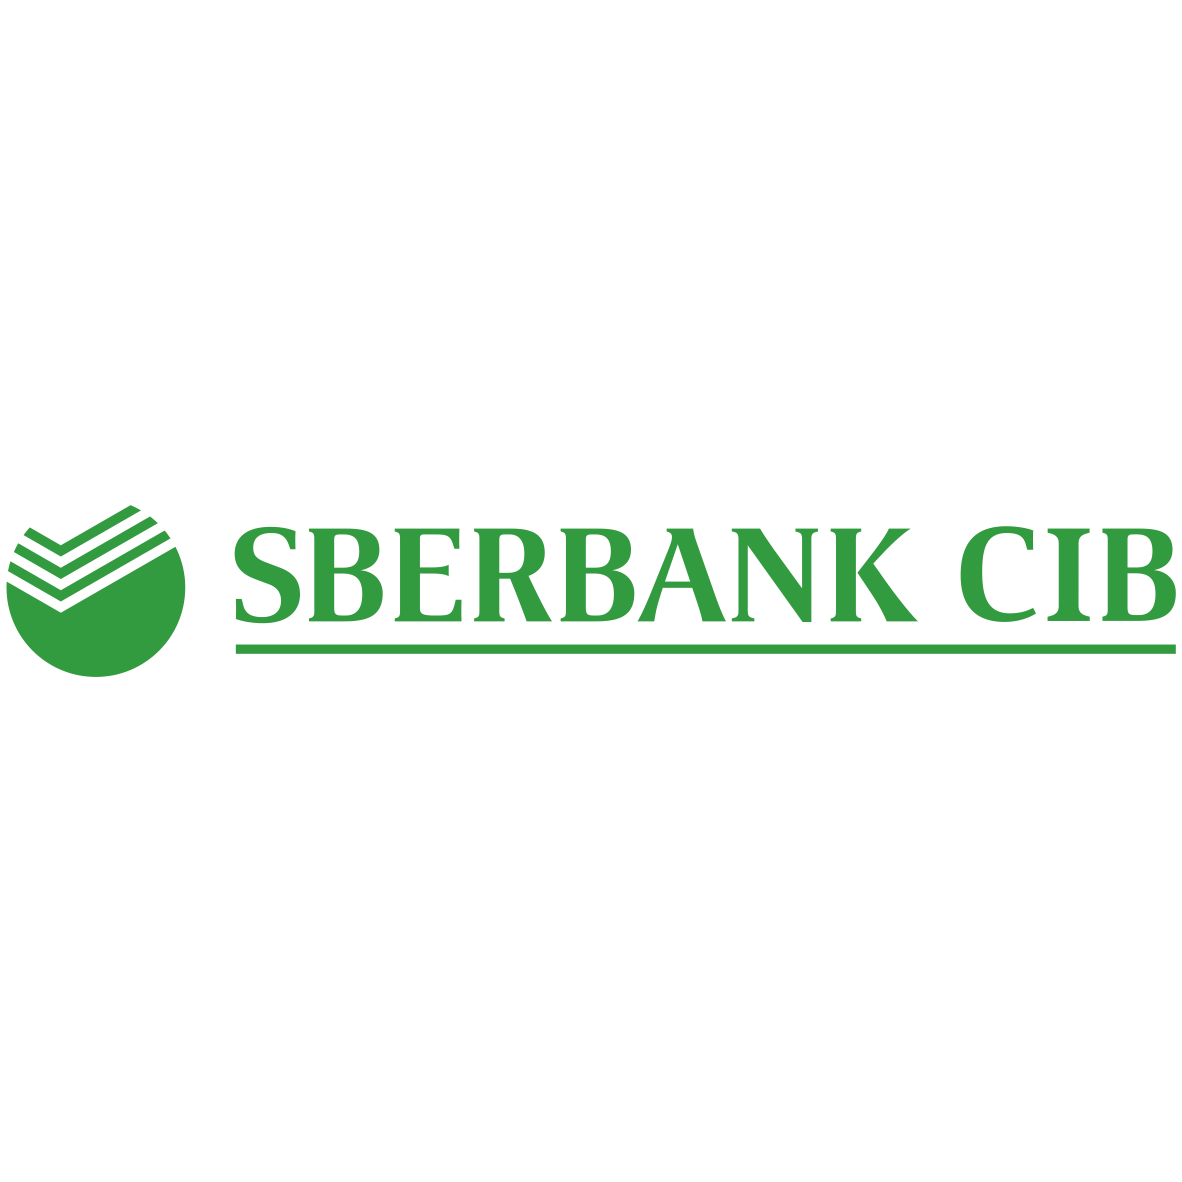 Сбербанк прома. Сбербанк. Сбербанк КИБ. Сбербанк России логотип. Sberbank CIB банк логотип.